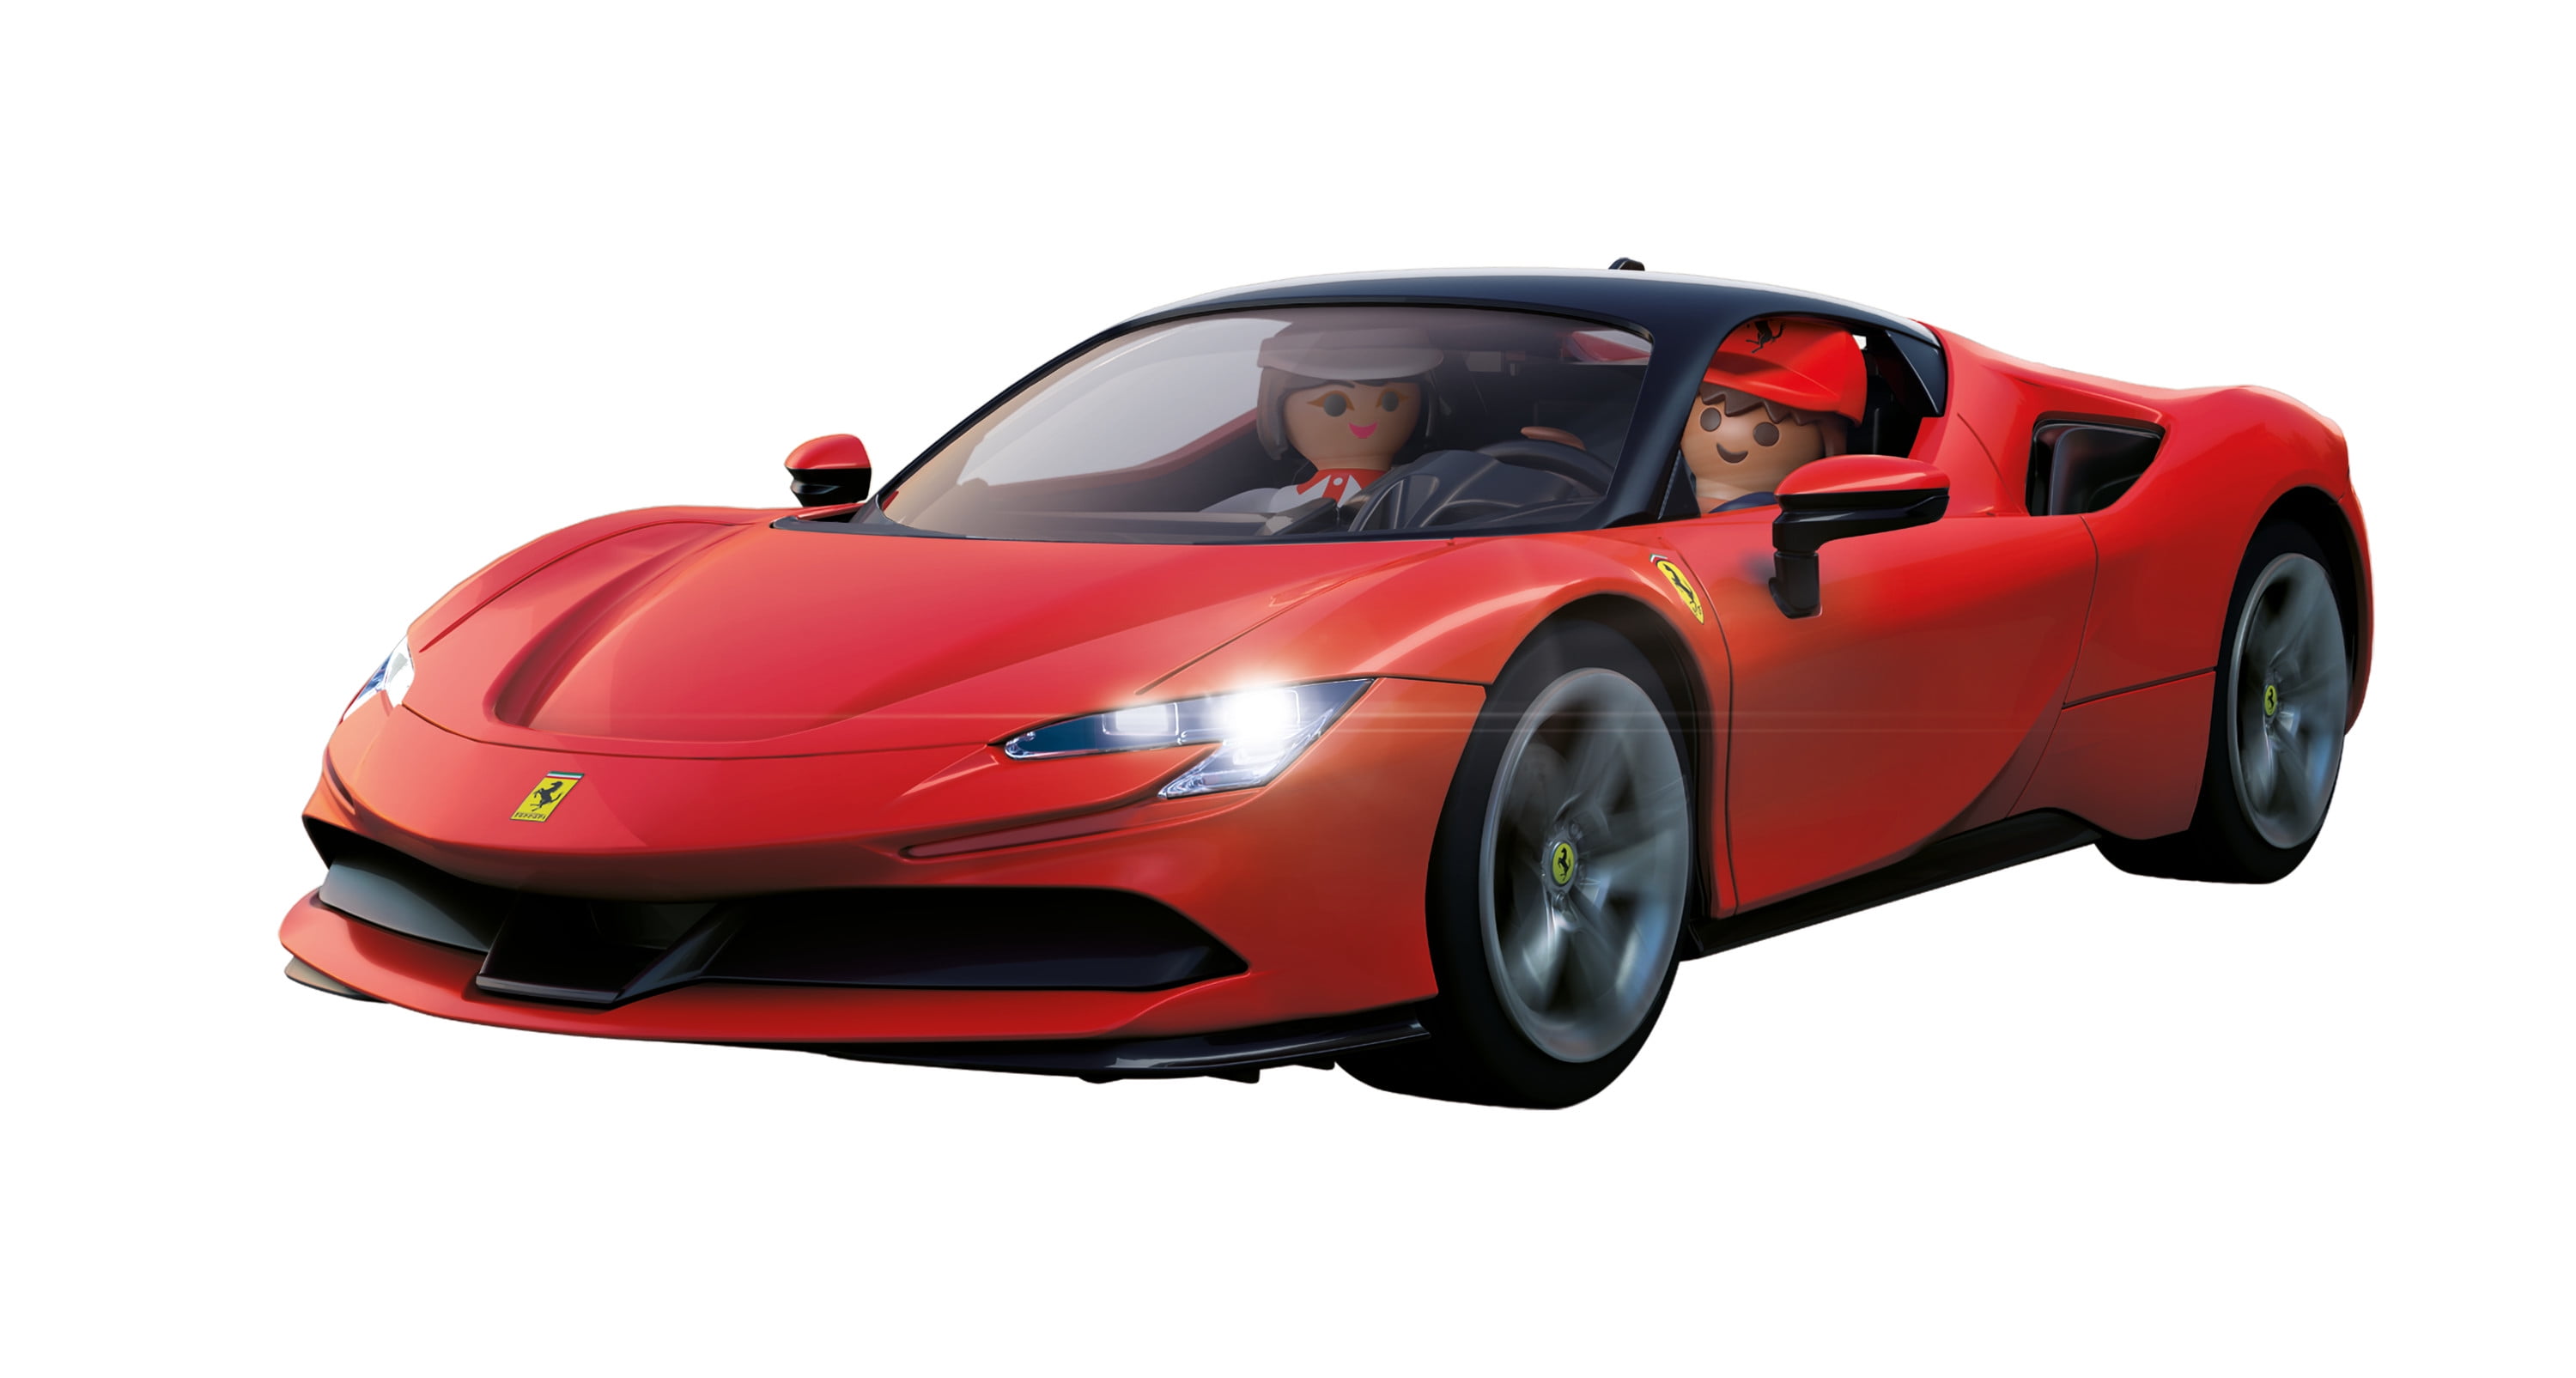 Playmobil : la Ferrari SF90 Stradale livre ses secrets - PDLV